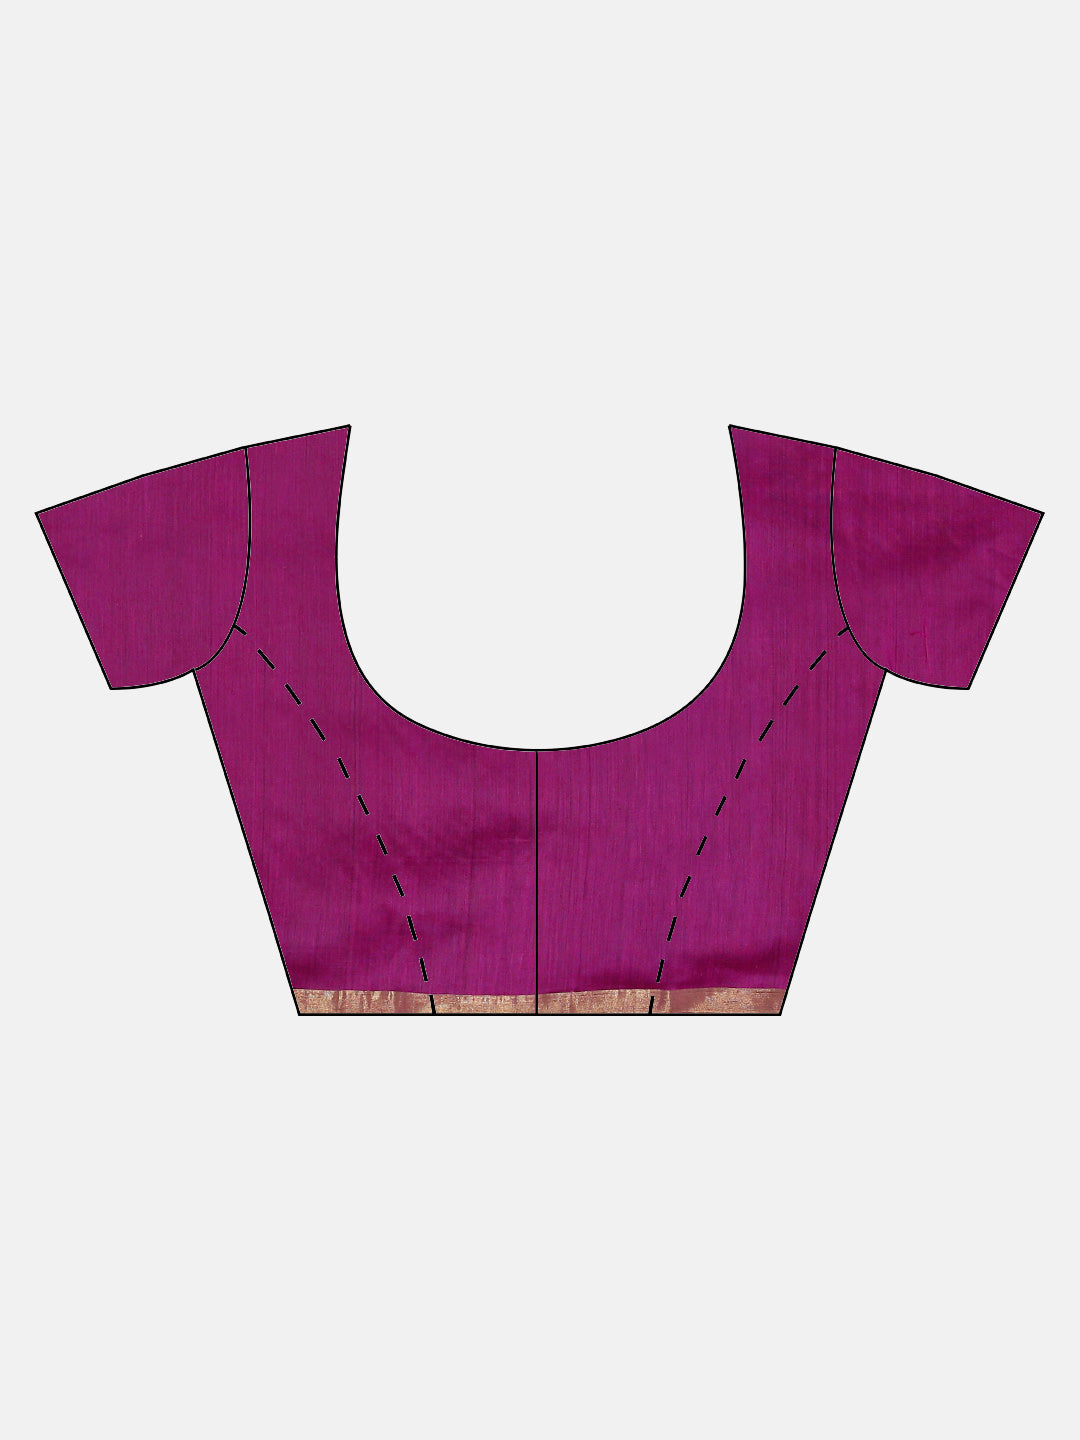 Women's Purple Hand woven Matka Silk Saree With Orange Thread Work - Sajasajo